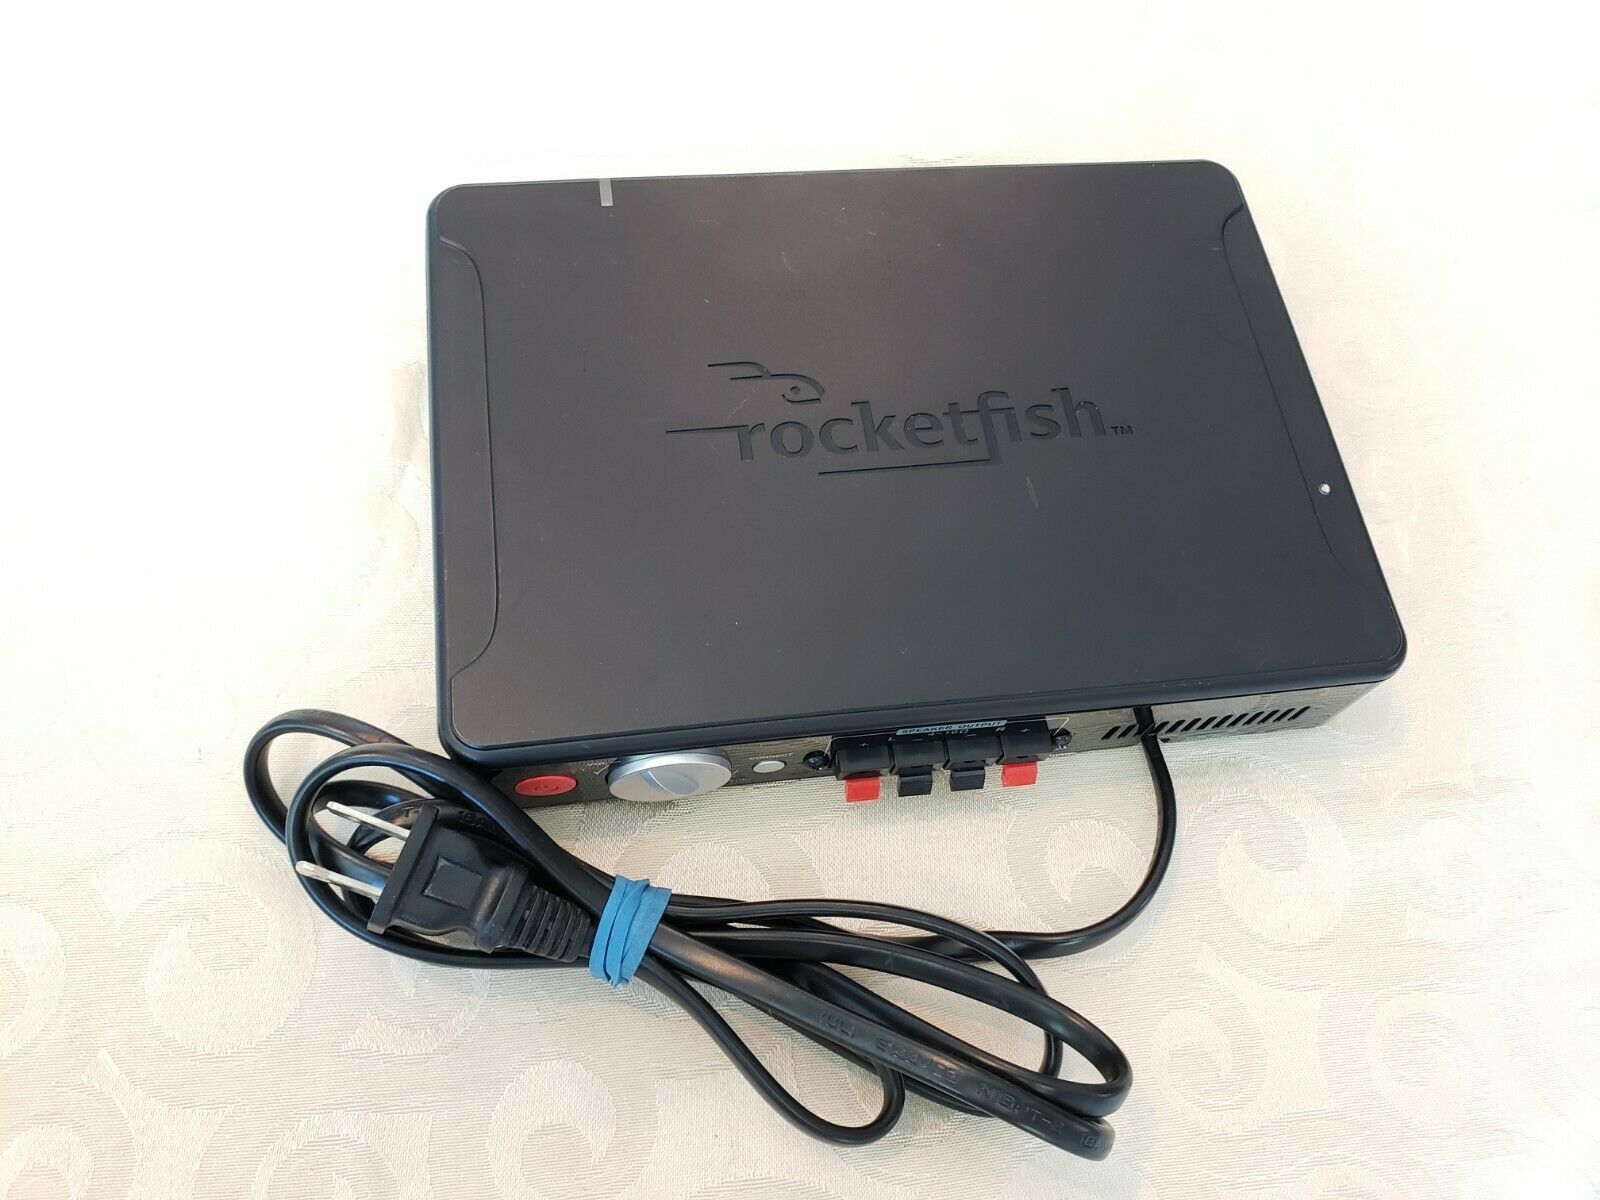 rocketfish rf 51sdcd windows 7 driver